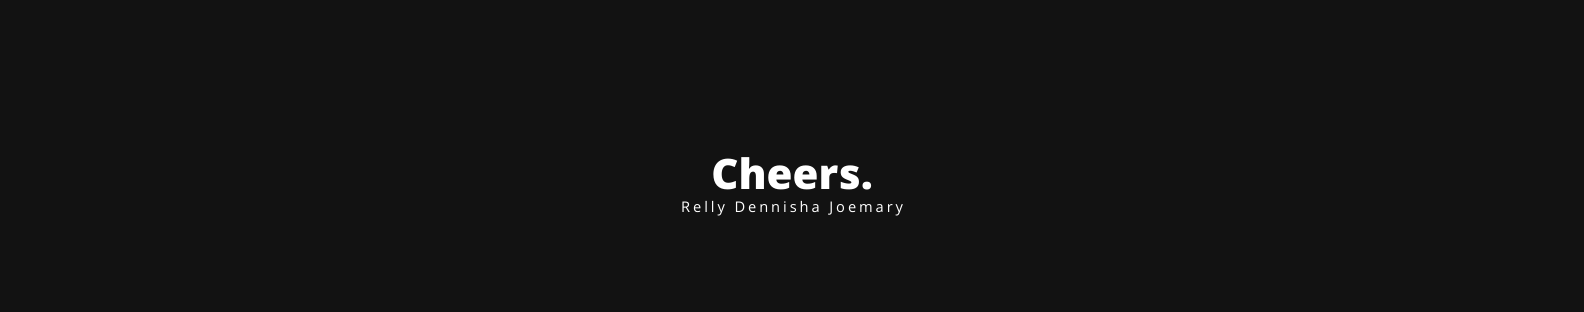 Relly Dennisha Joemary's profile banner